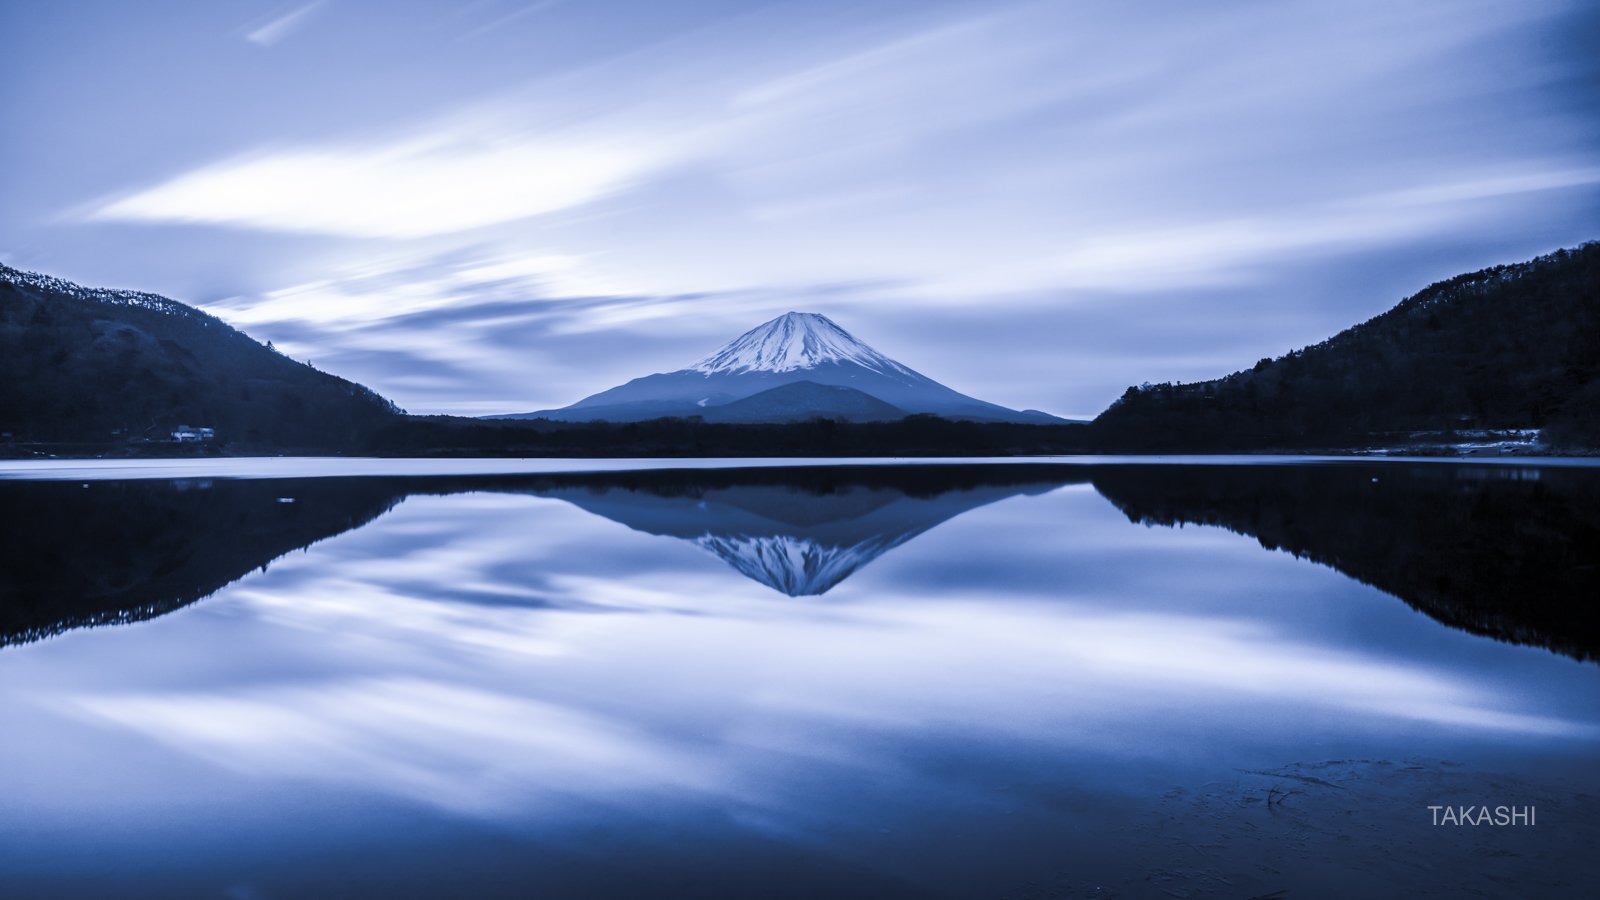 Fuji,Japan,mountain,clouds,lake,reflection,, Takashi